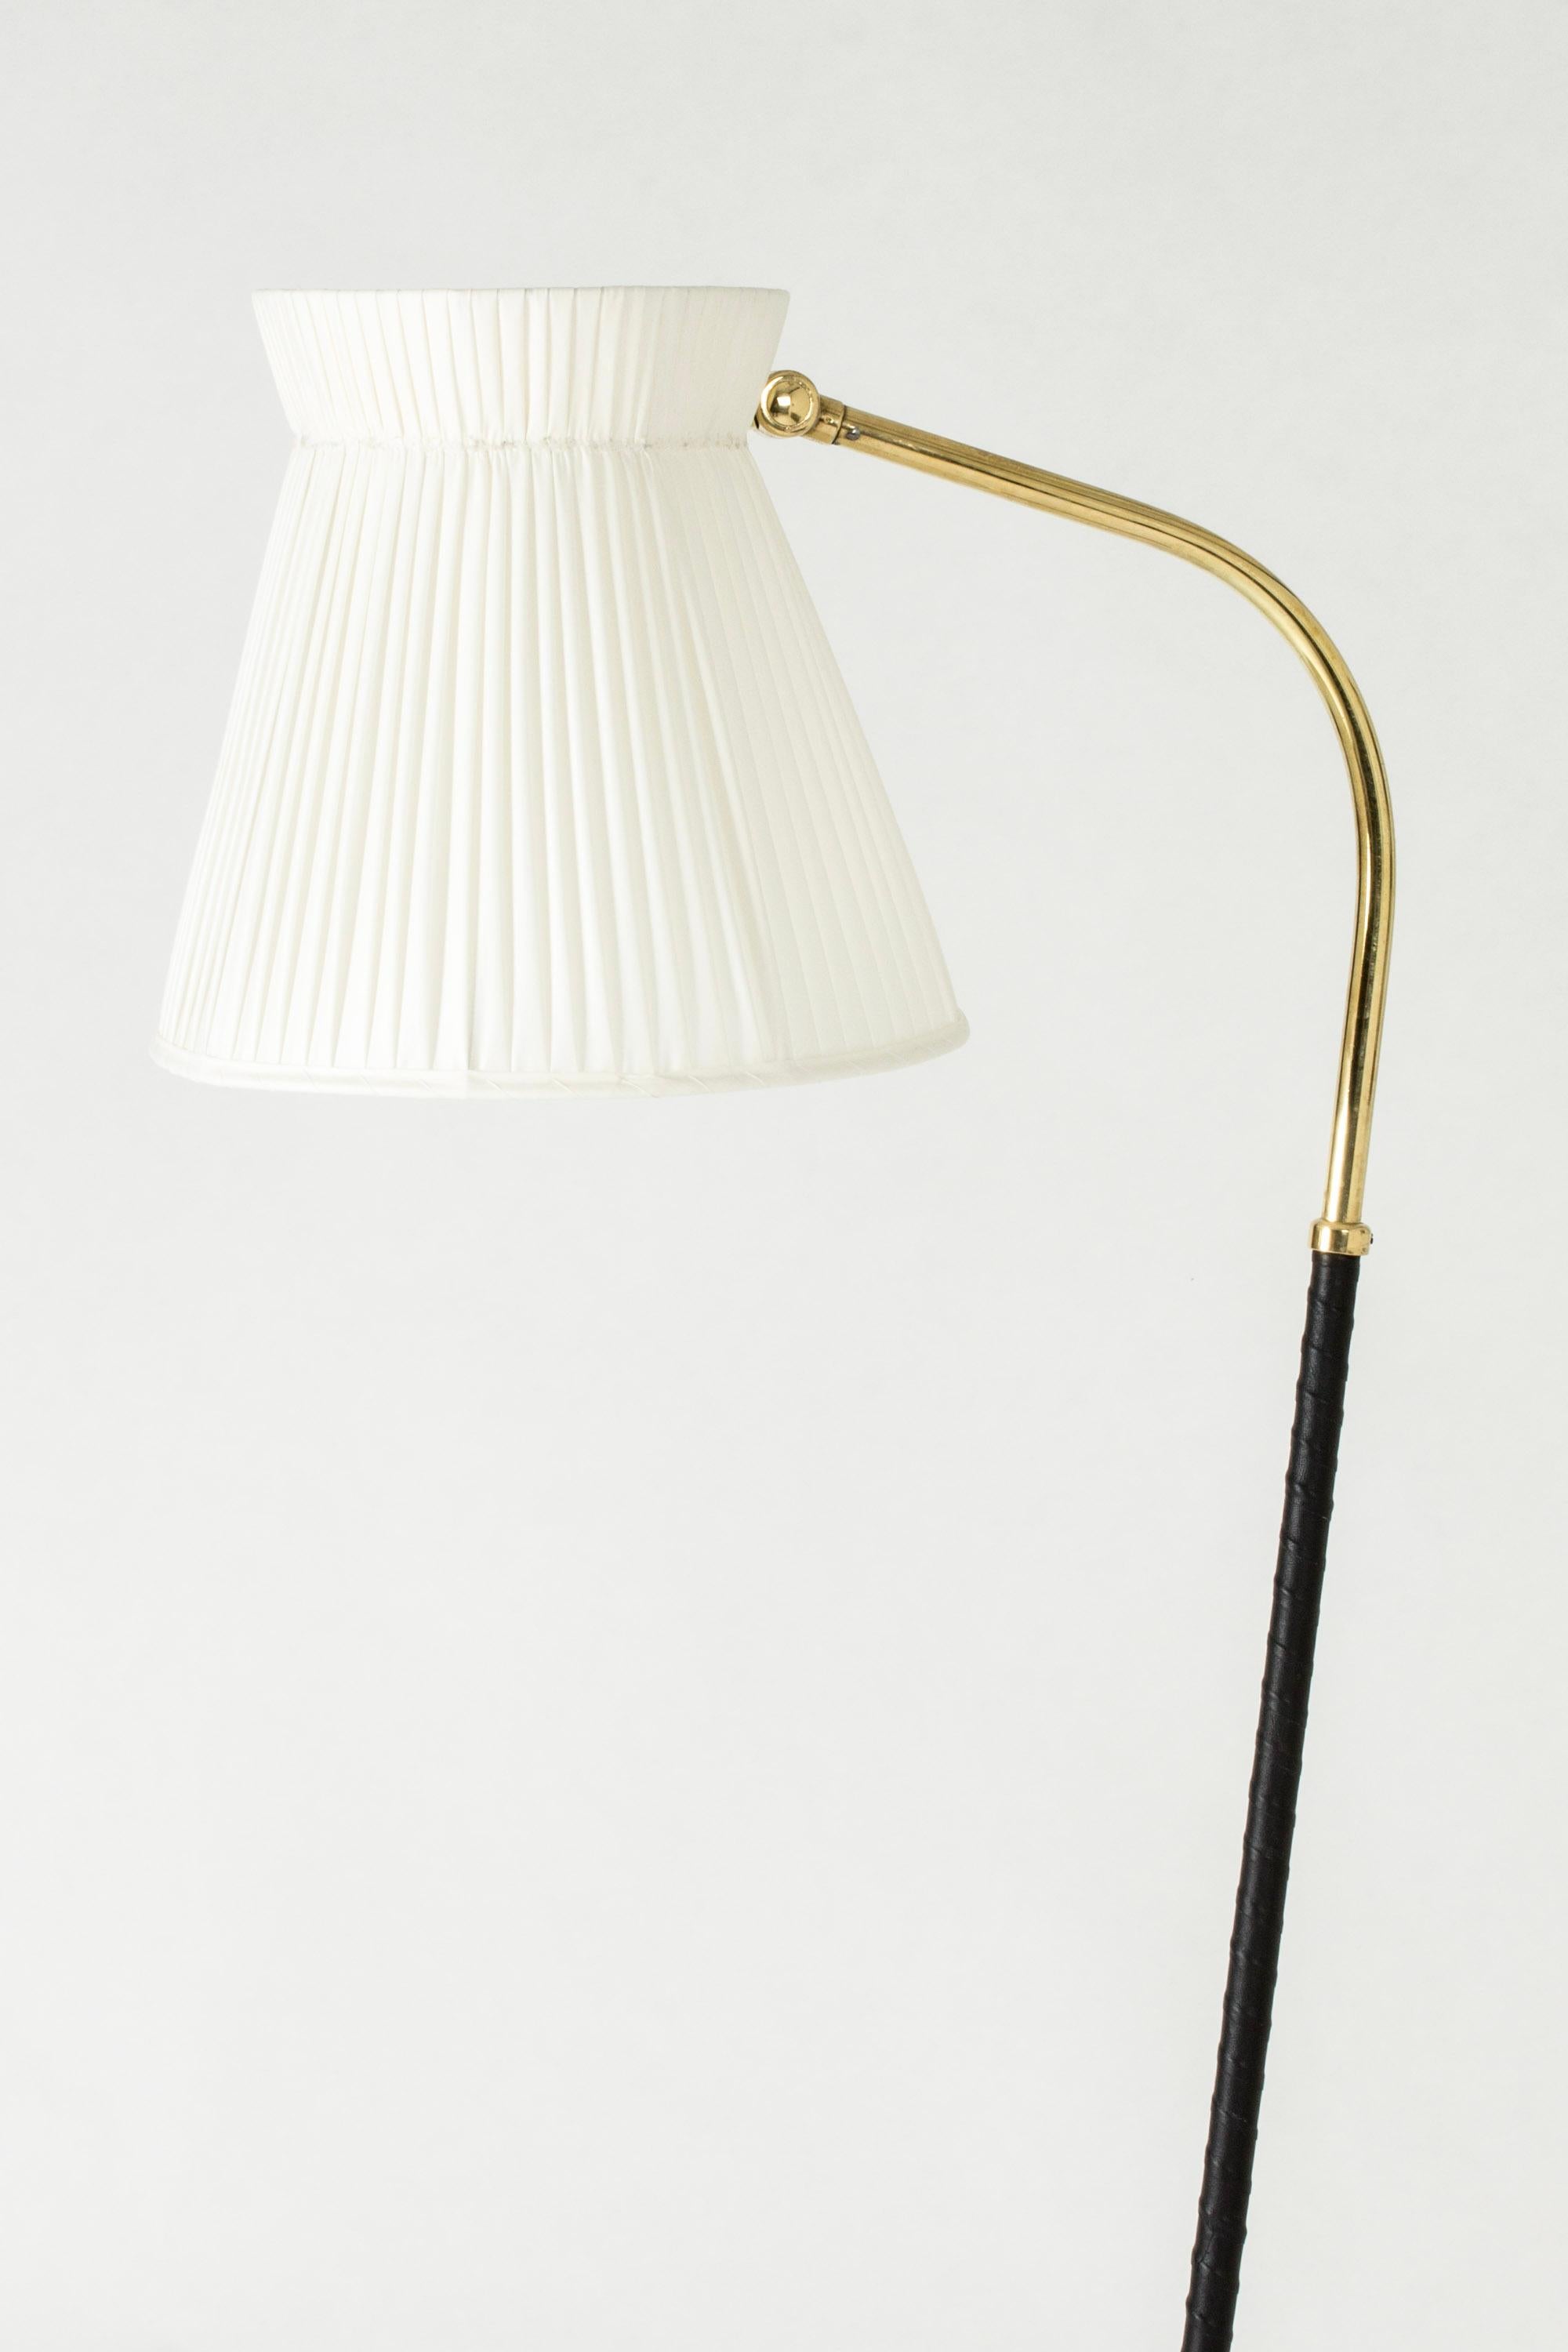 Scandinavian Modern Midcentury Modern Floor Lamp by Lisa Johansson-Pape for Orno, Finland For Sale